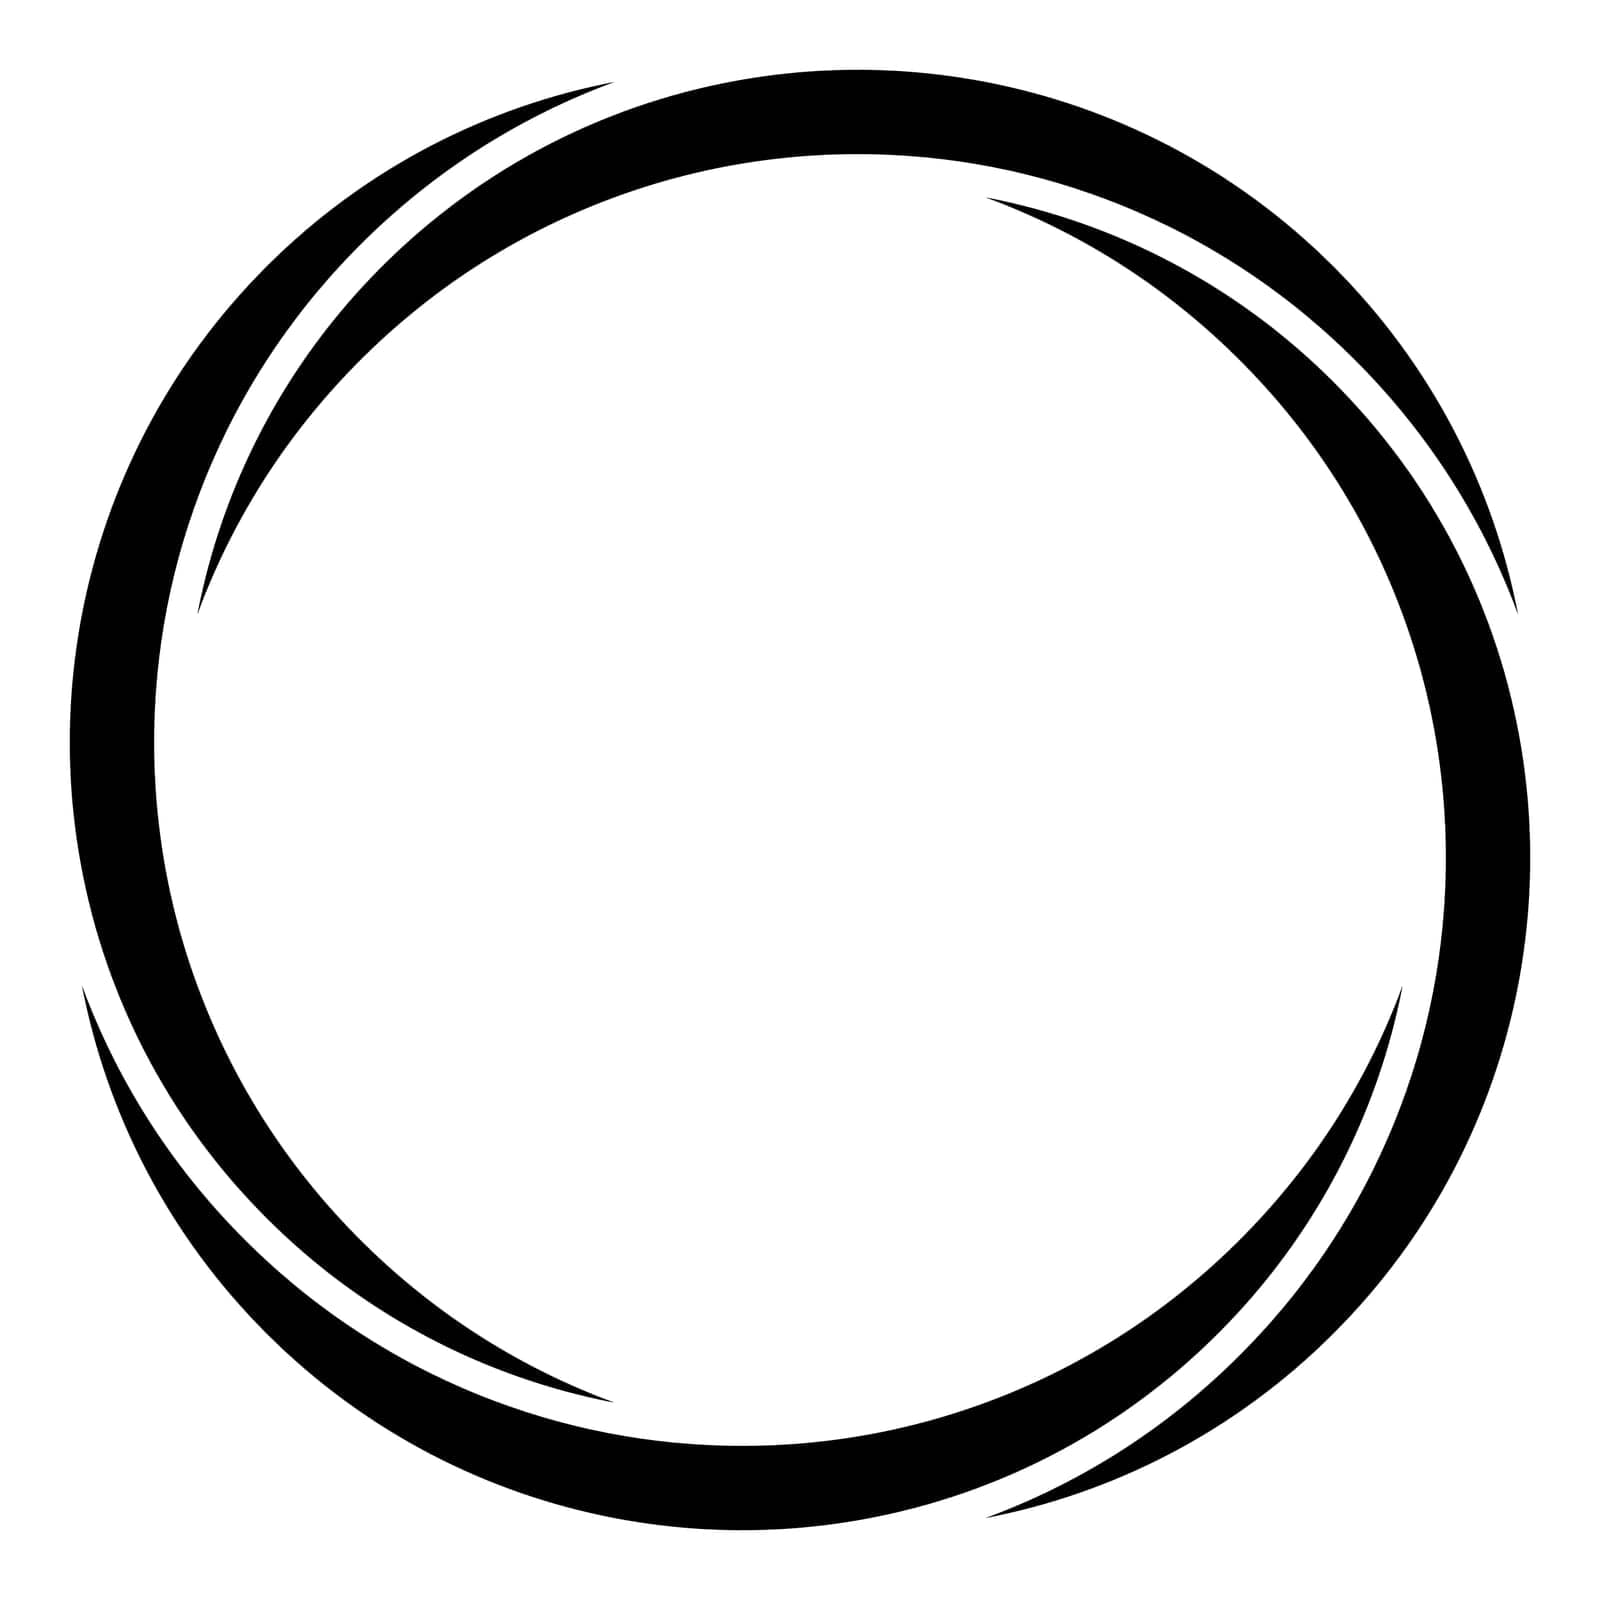 Round curve frame, 4 sectors moon ornament circle border doodle